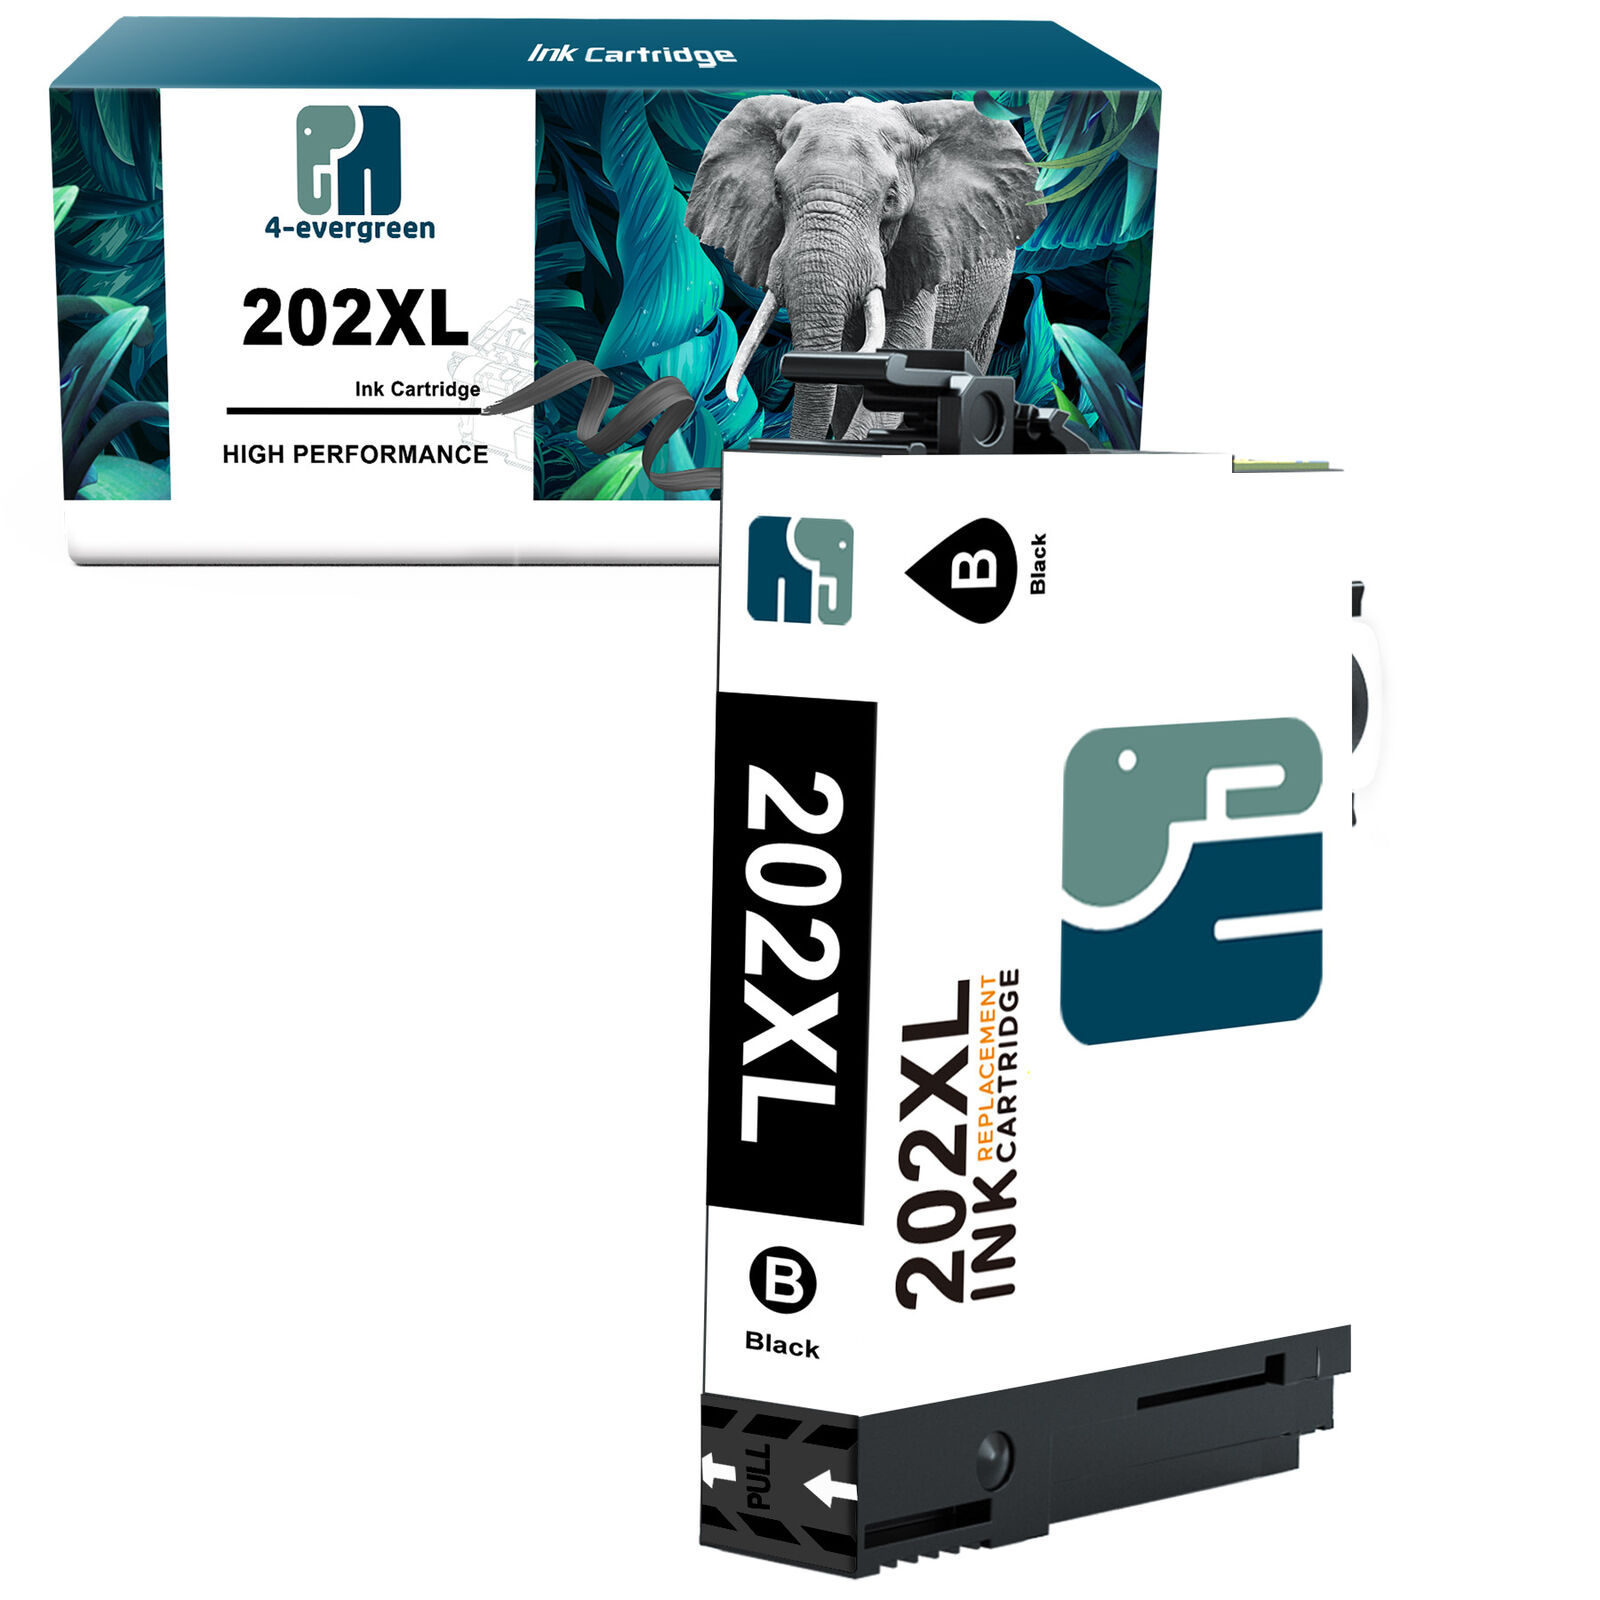 202XL T202XL Ink Cartridge for Epson Workforce WF2860 Printer Lot